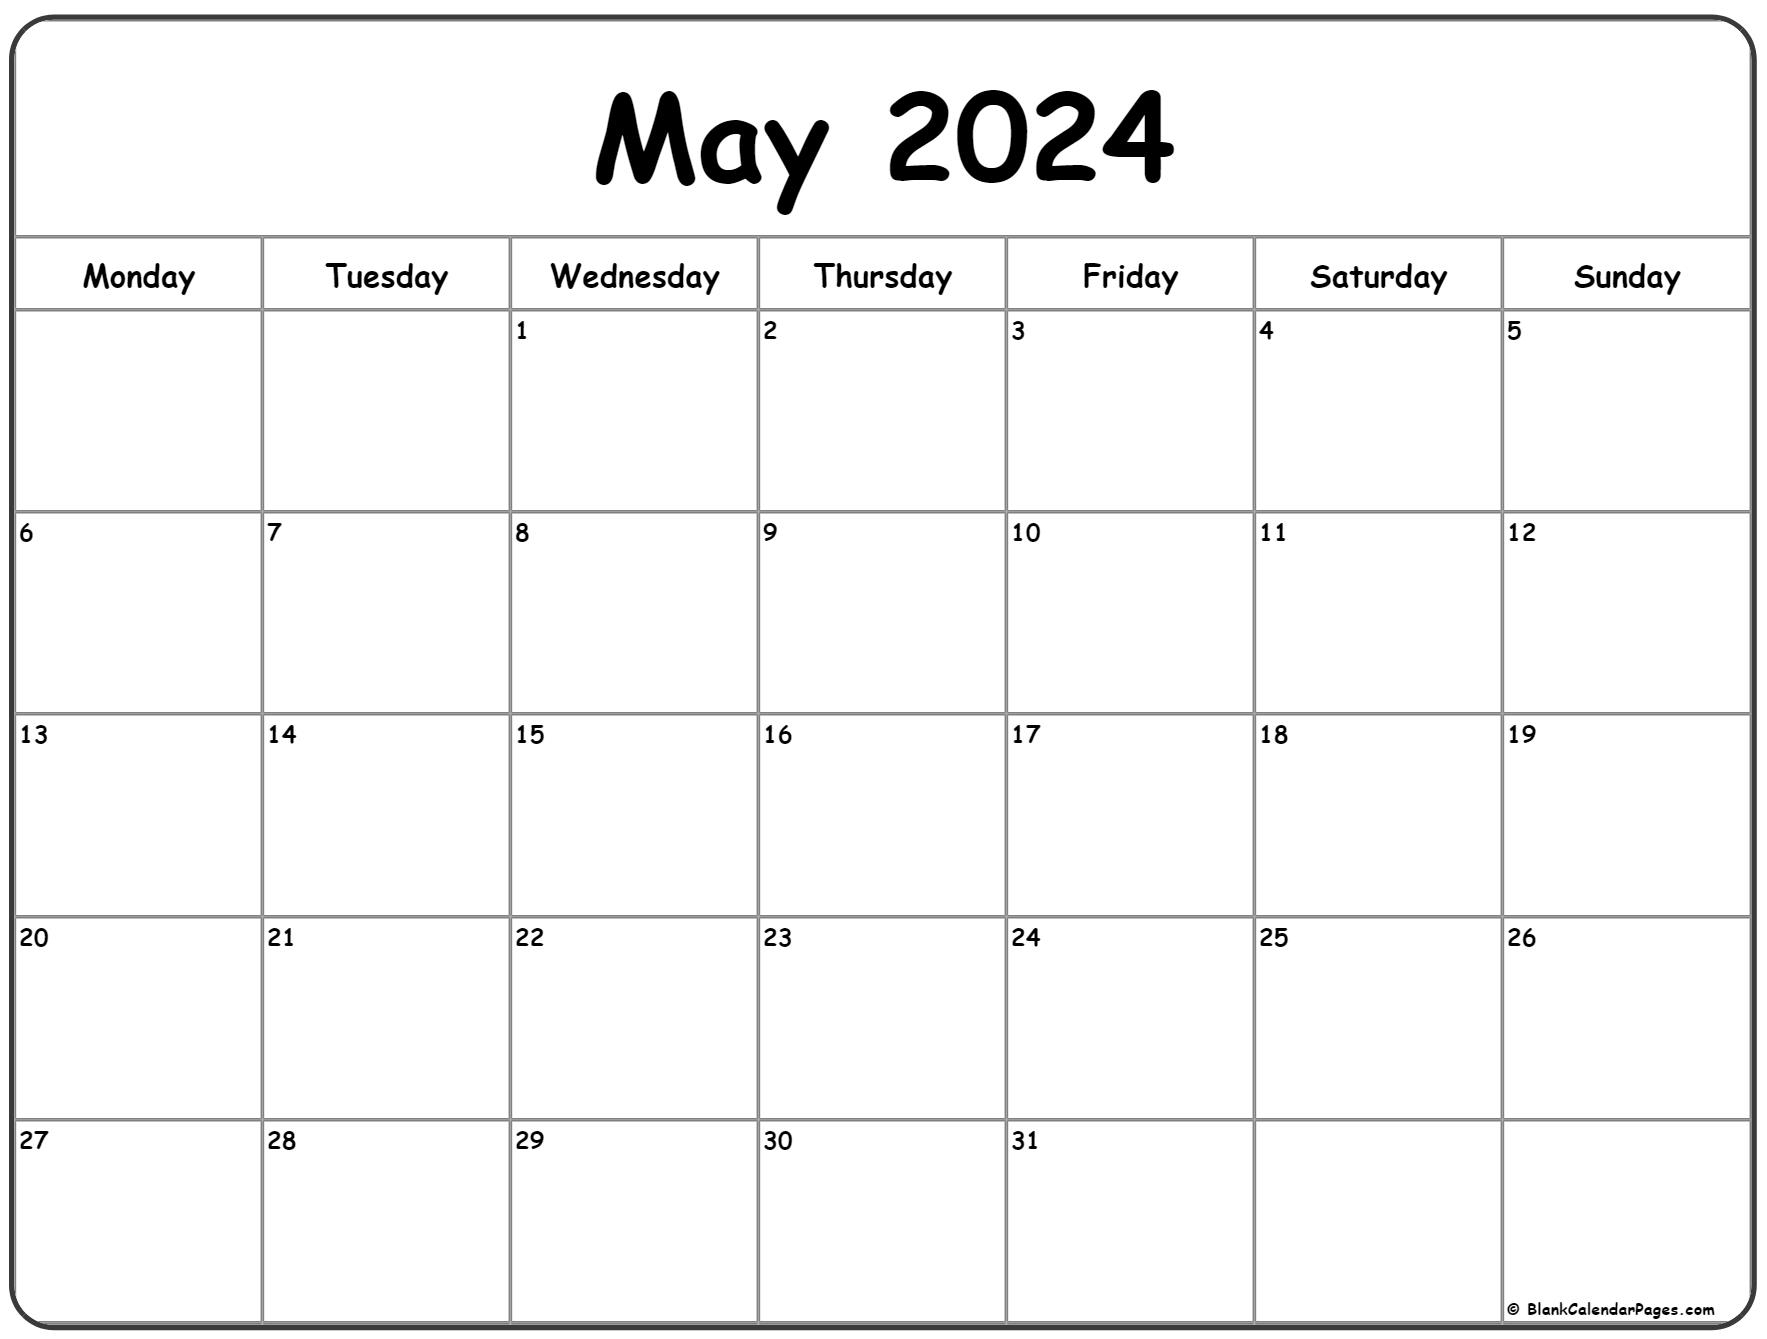 May 2024 Monday Calendar | Monday To Sunday for May 2024 Weekly Calendar Printable